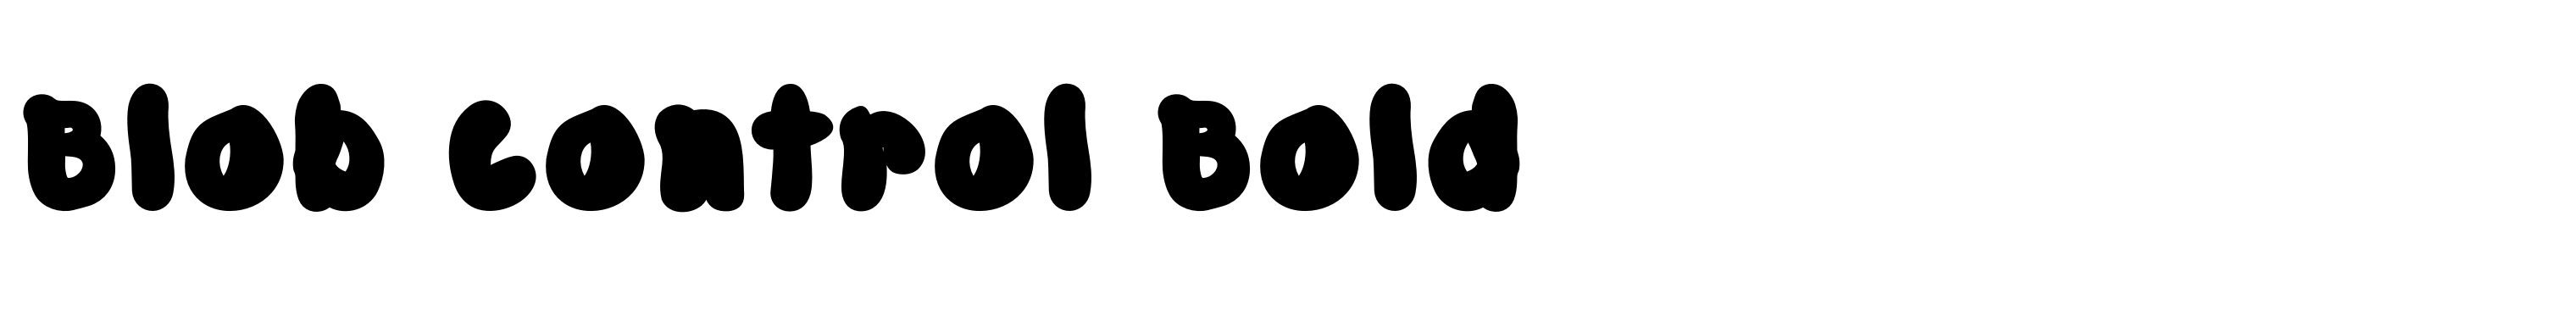 Blob Control Bold